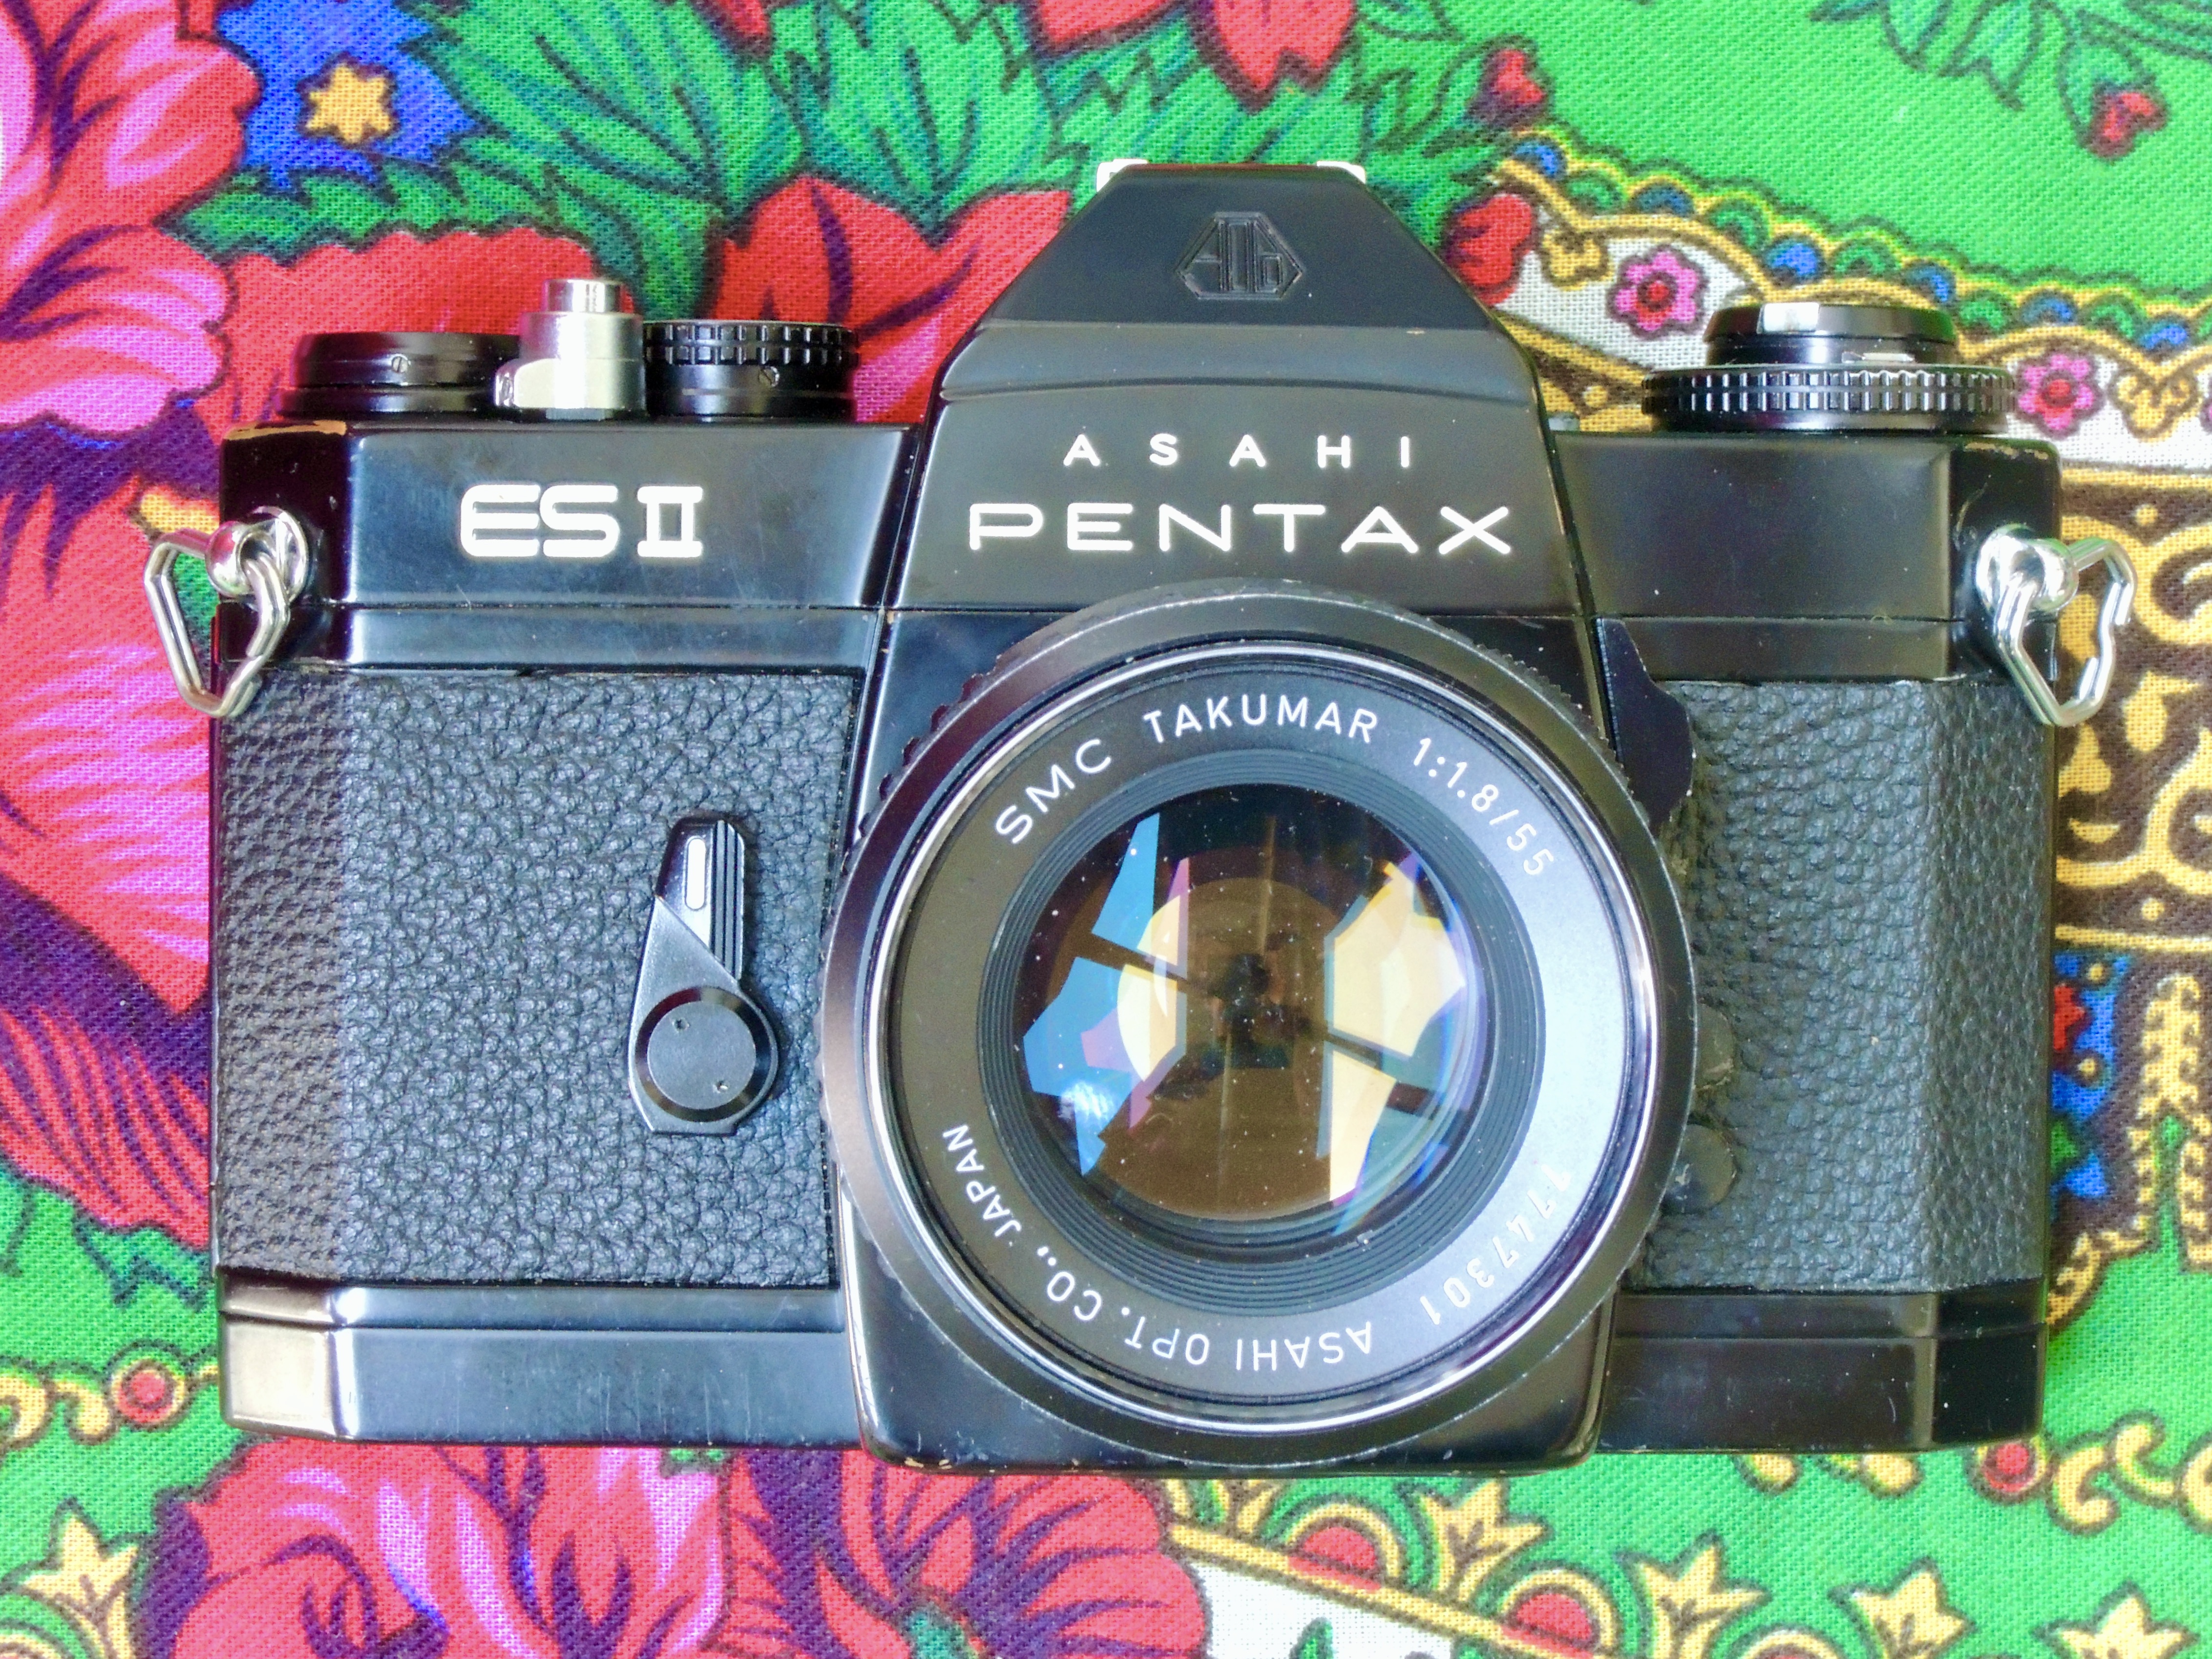 The Asahi Pentax ES II – All my cameras